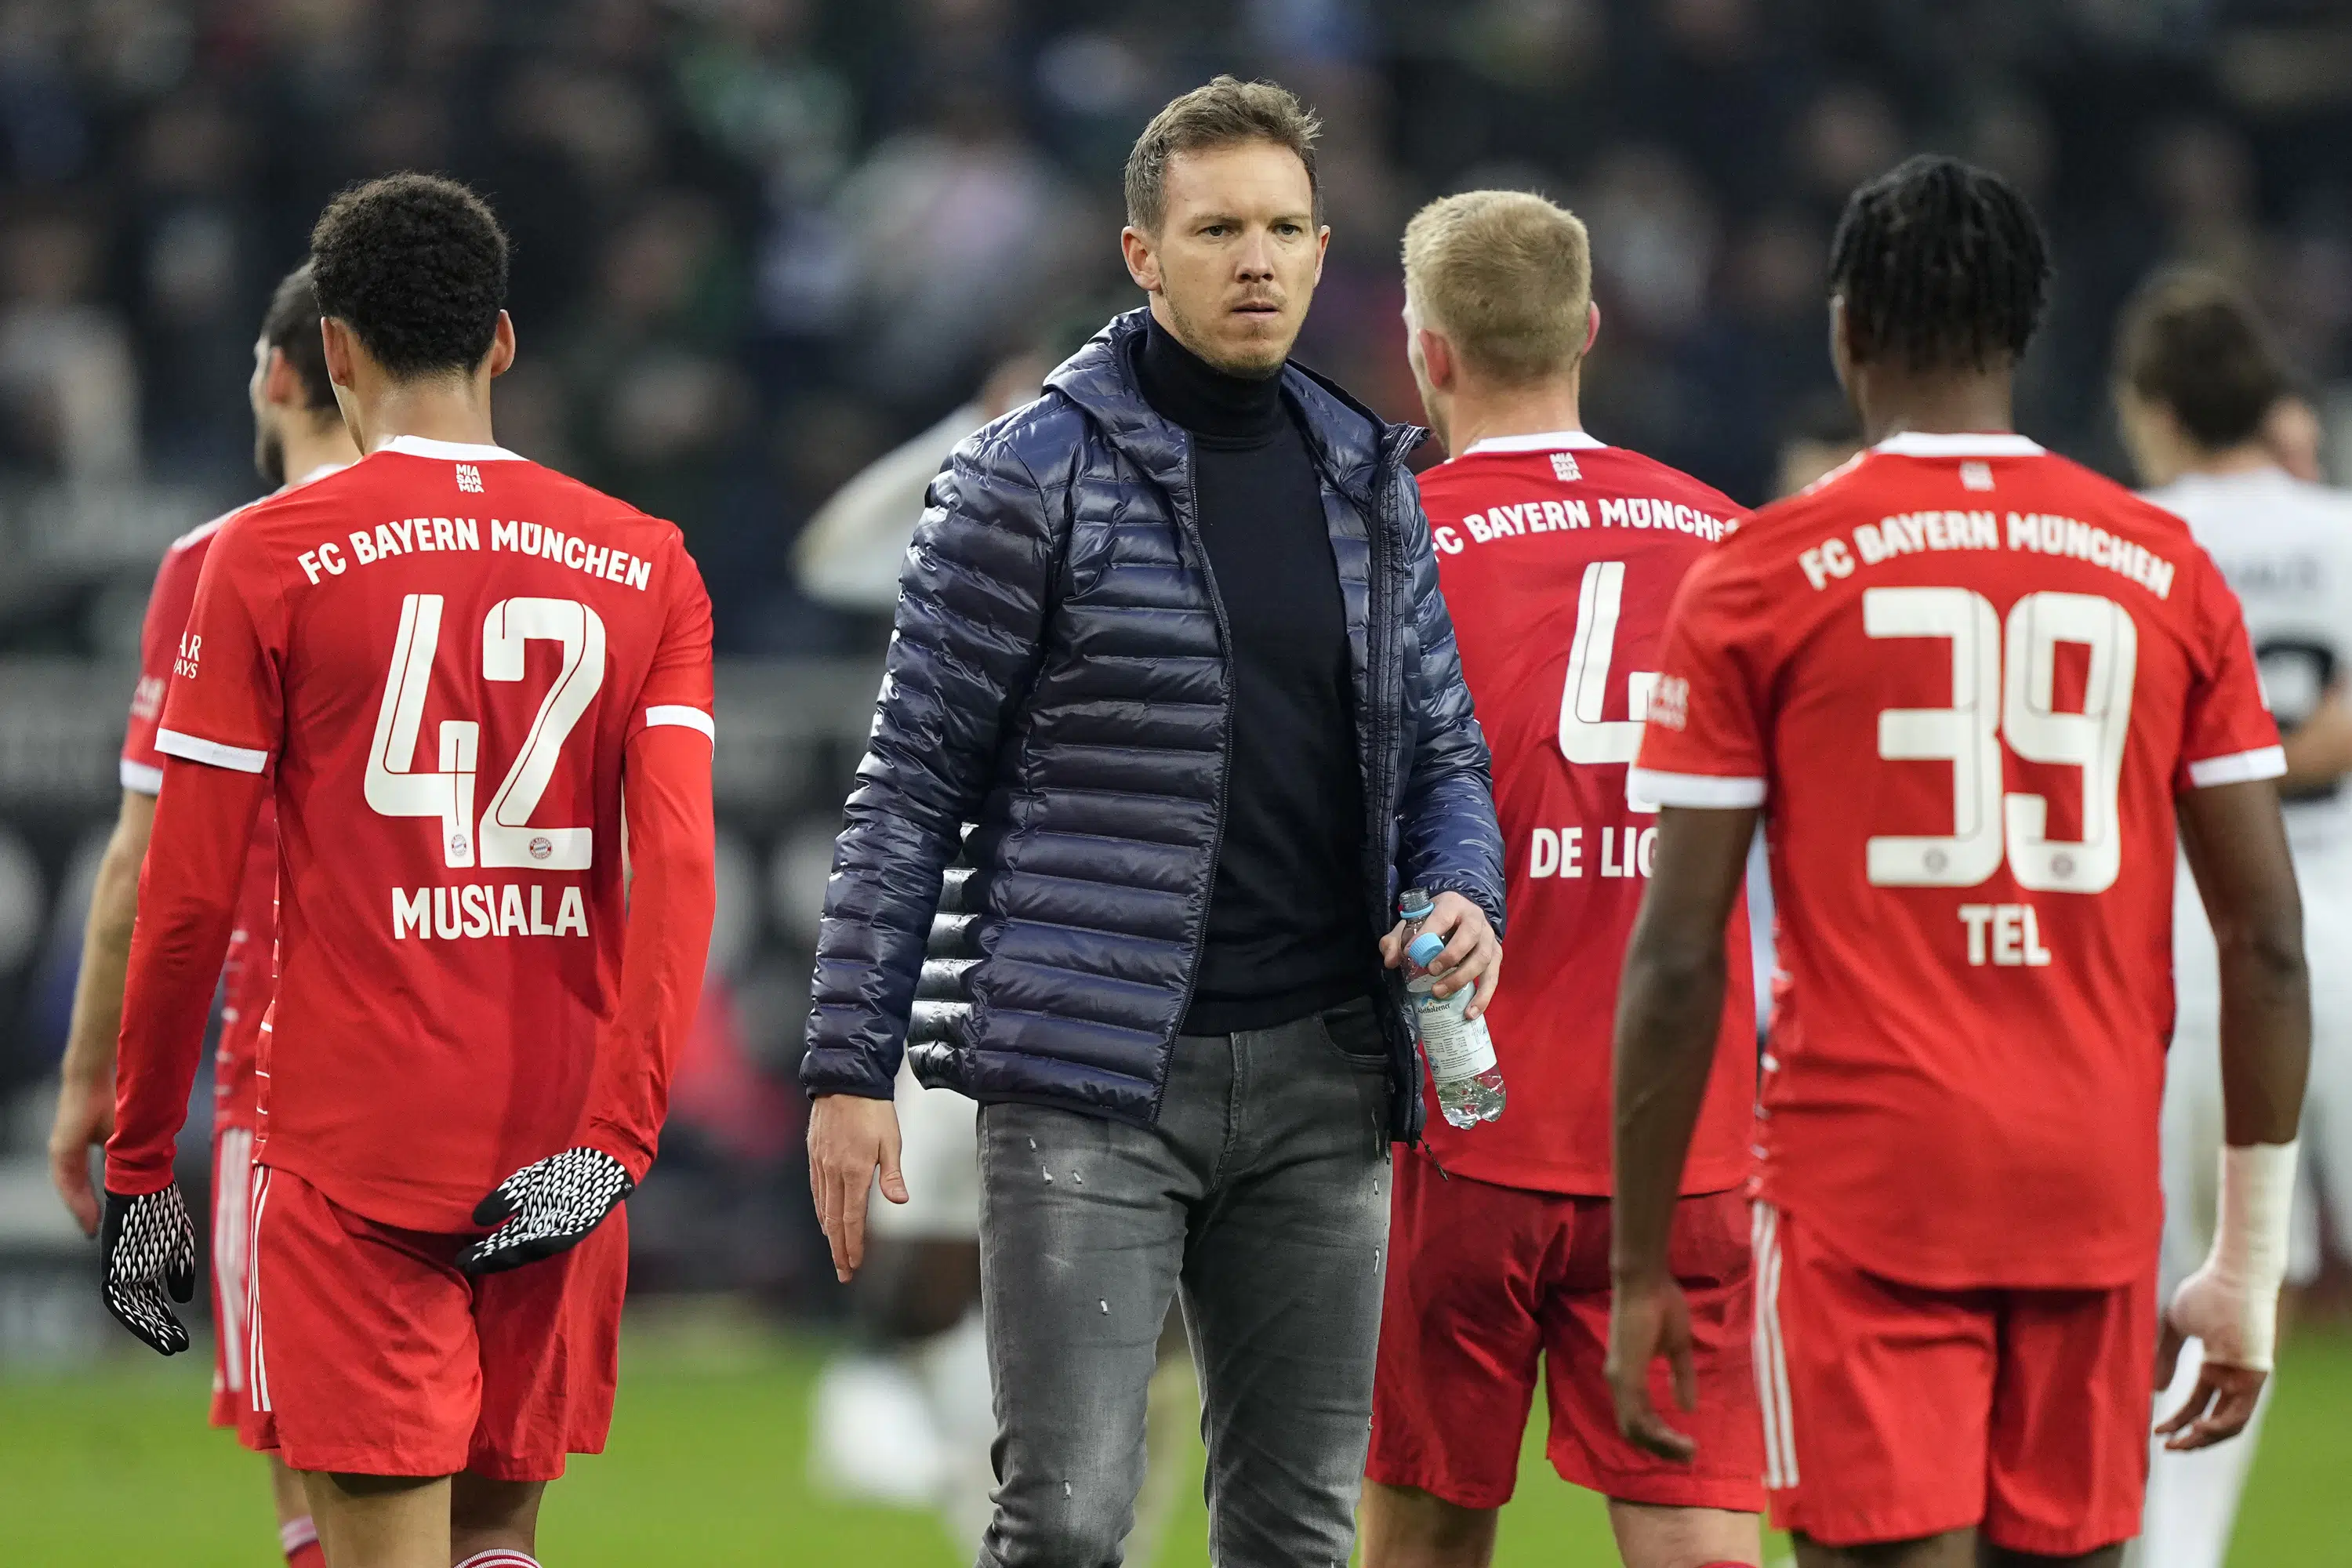 Pressure building on Bayern coach Nagelsmann after outburst